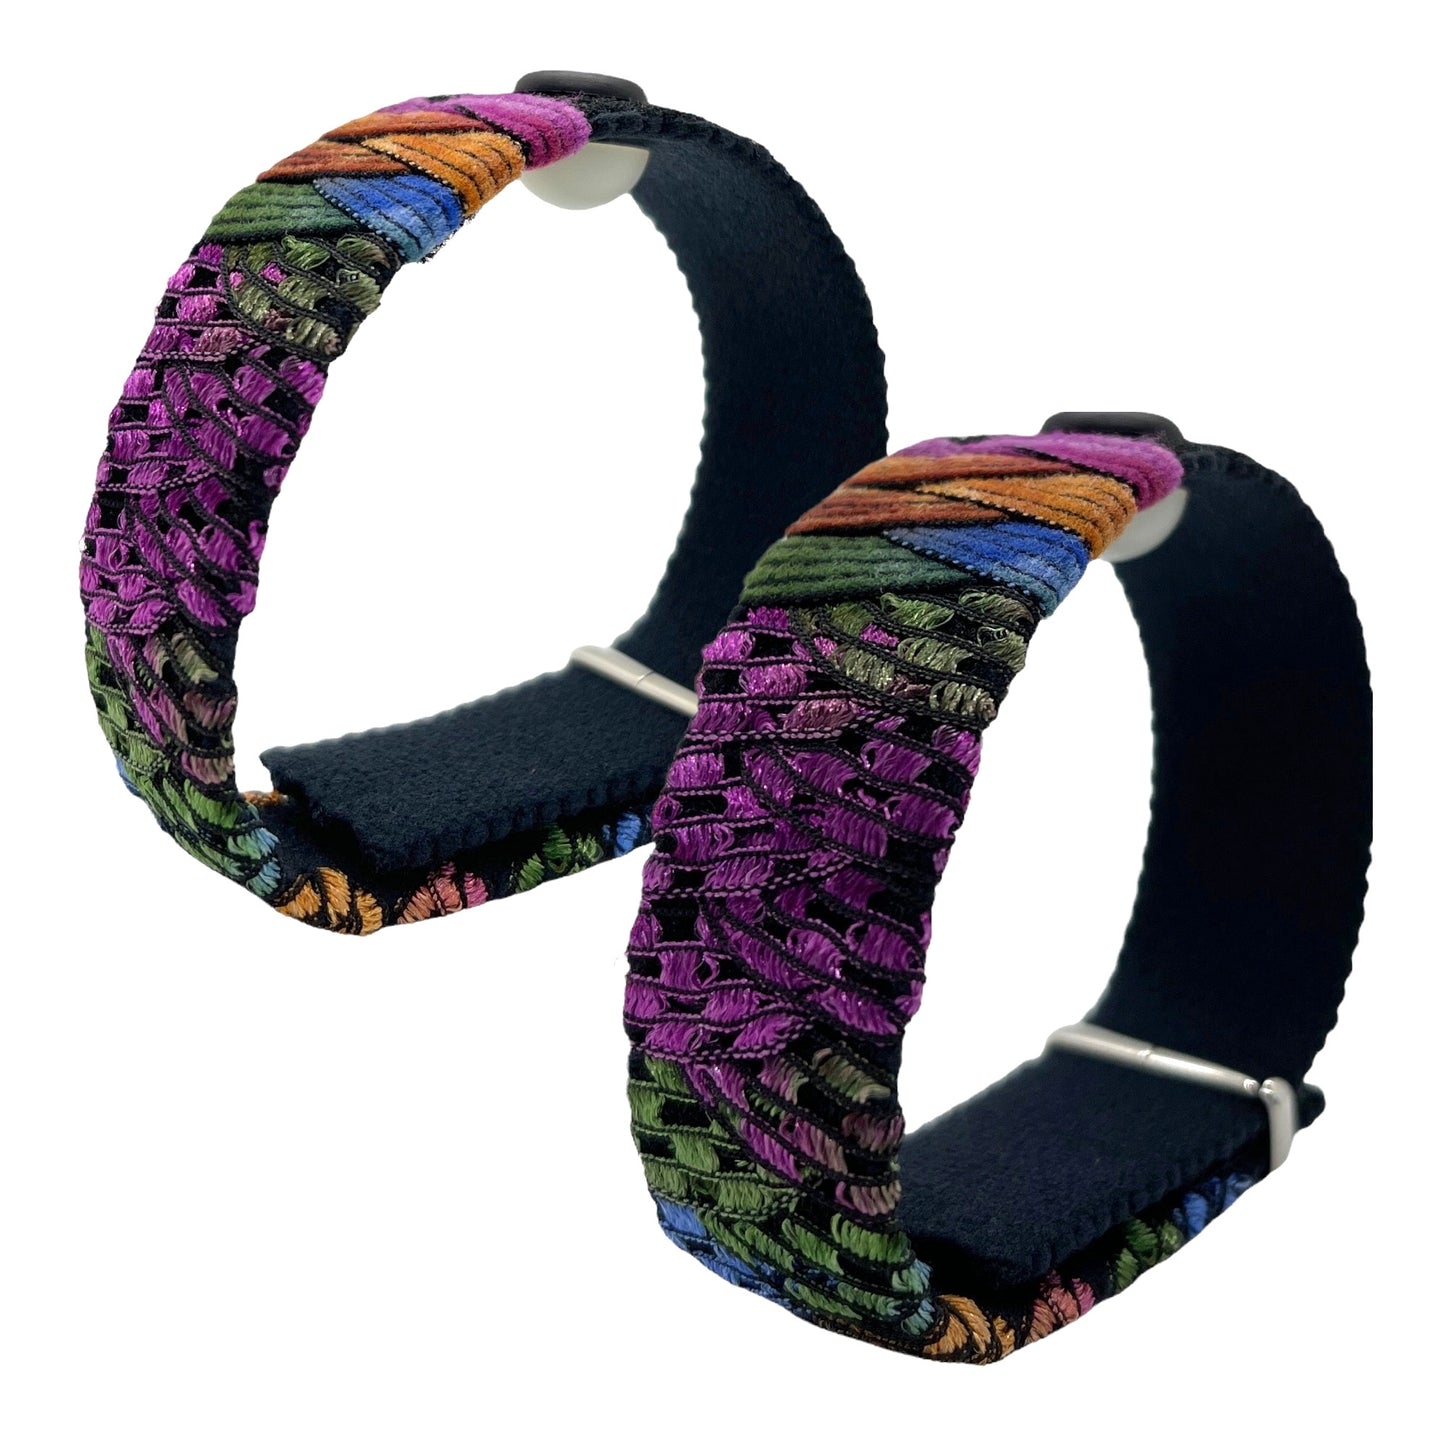 Designer Anti-Nausea Bracelets-Adjustable Motion Sickness Relief, Calming-Pair